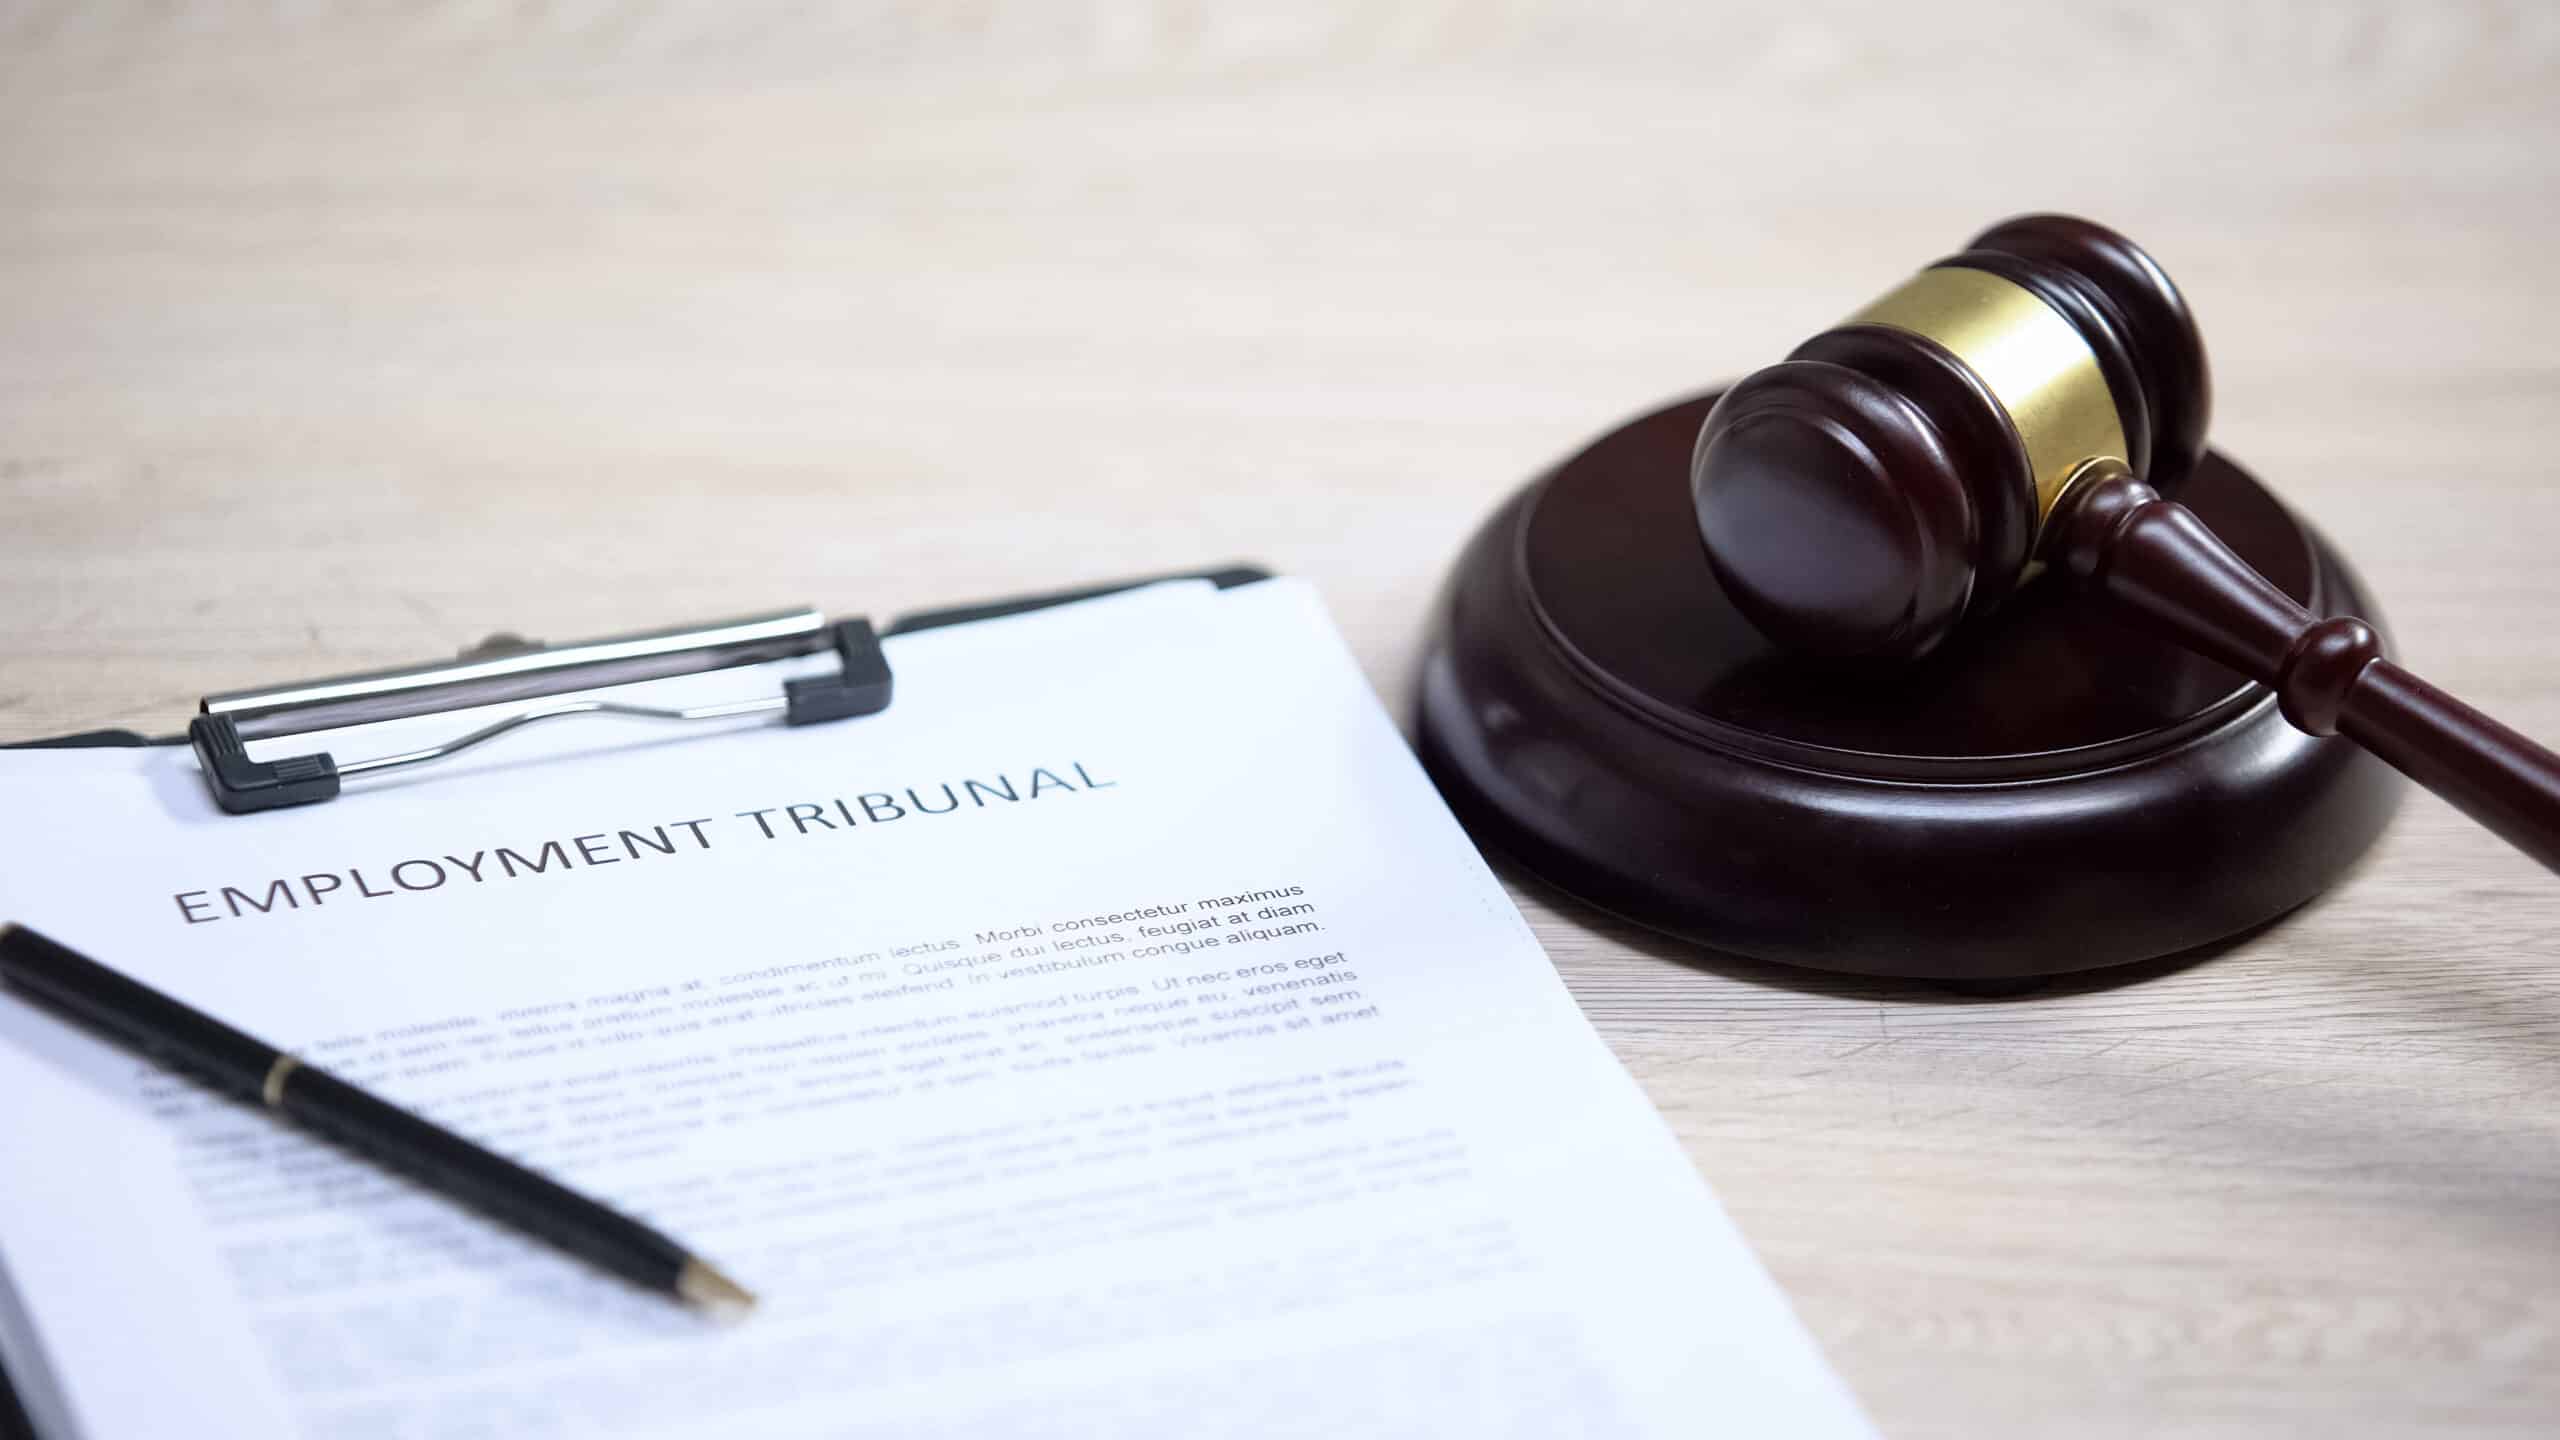 Employment tribunal claim